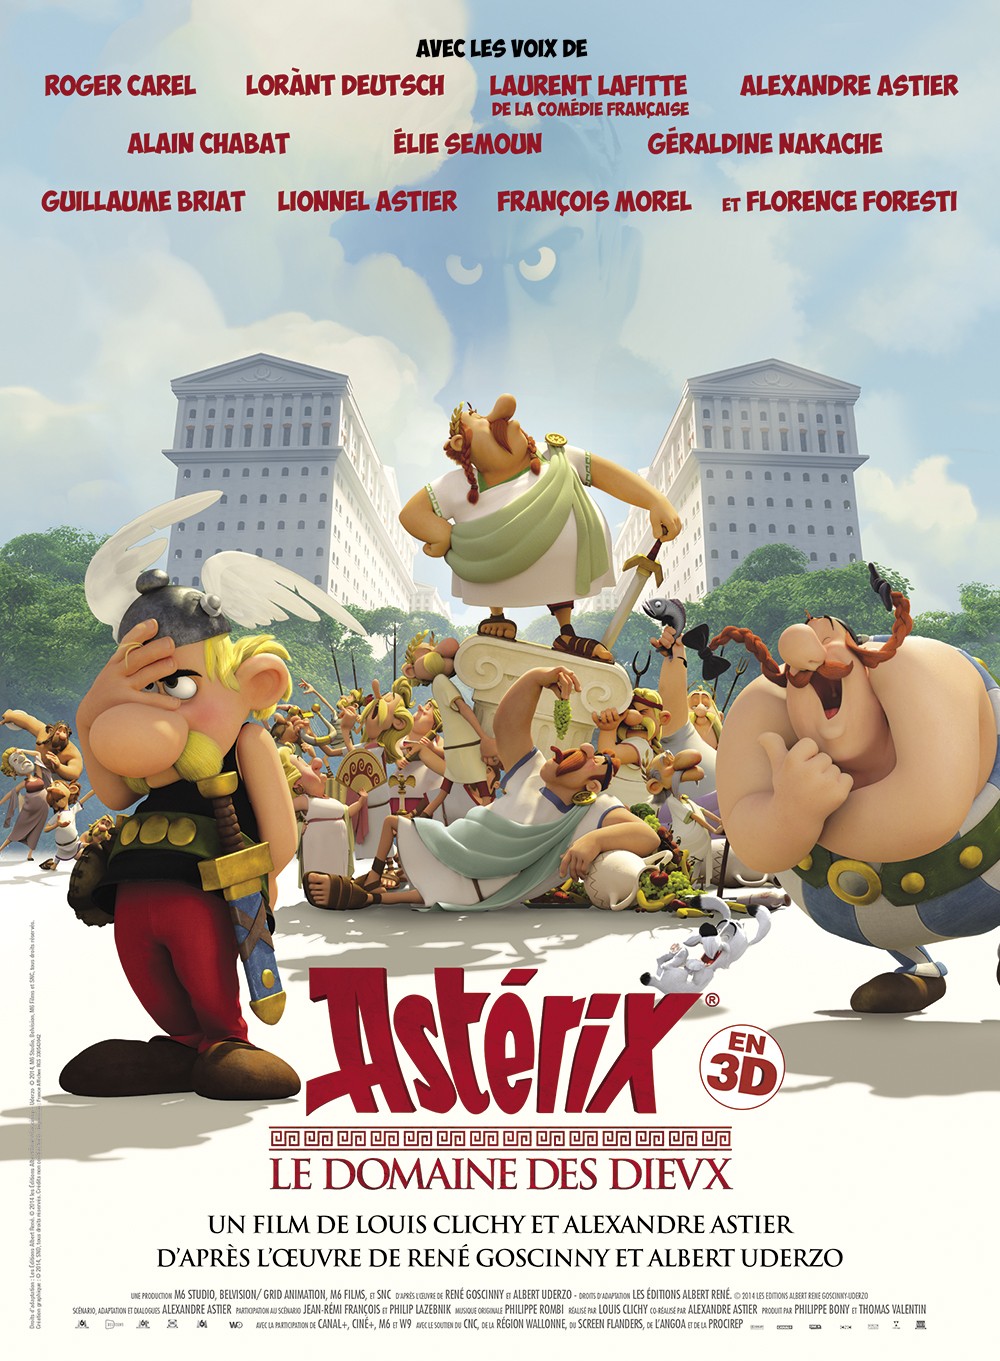 Extra Large Movie Poster Image for Astérix: Le domaine des dieux (#4 of 9)